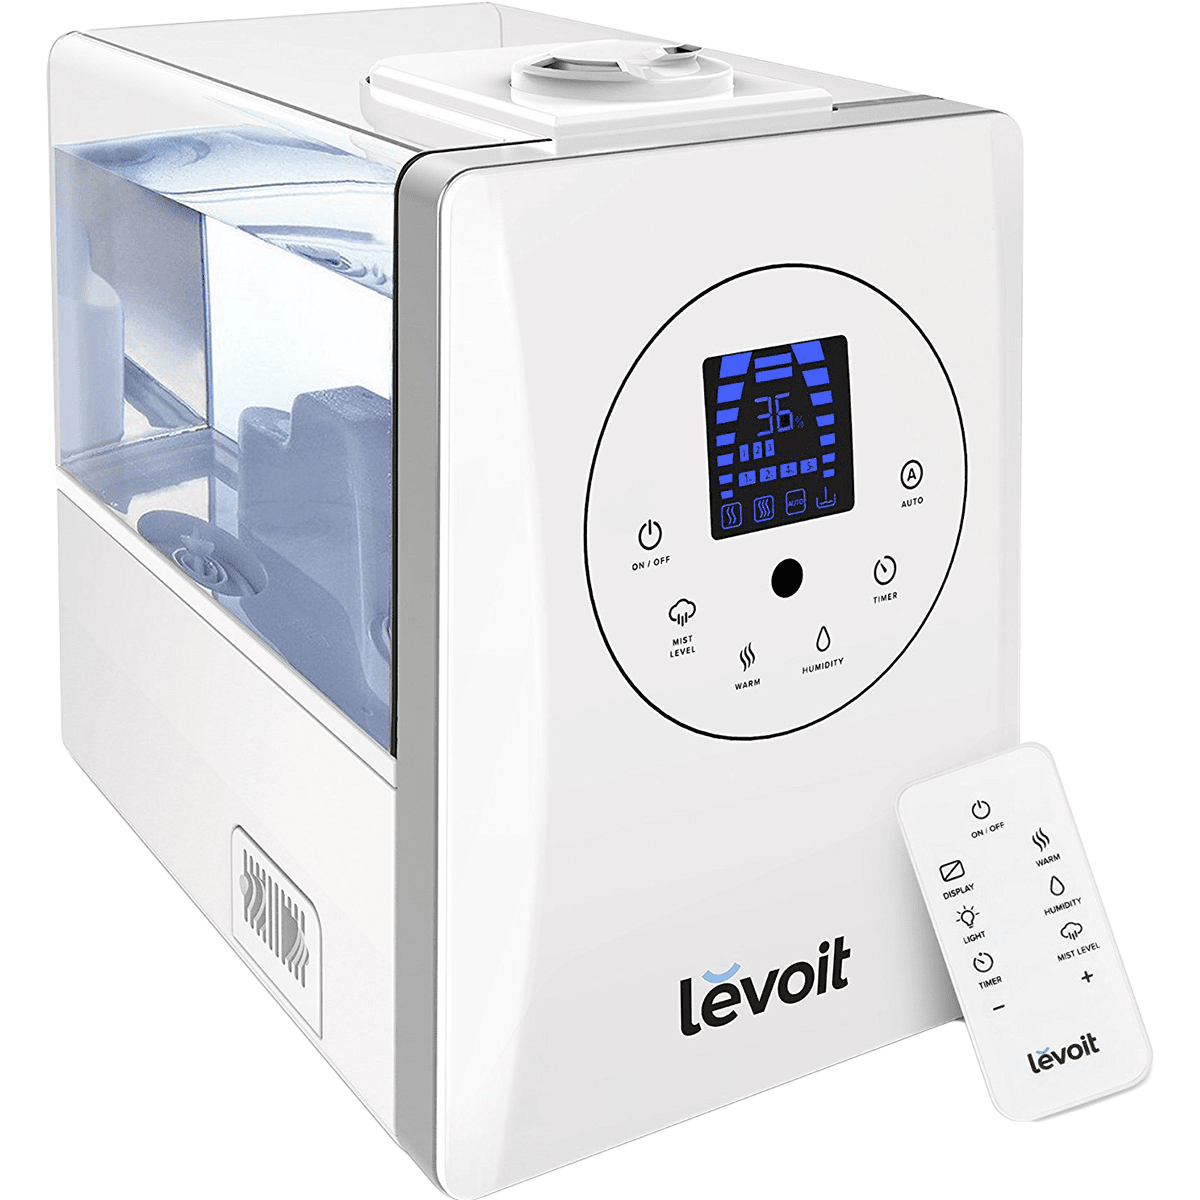 Levoit Lv600hh 1.5 Gallon Hybrid Ultrasonic Humidifier